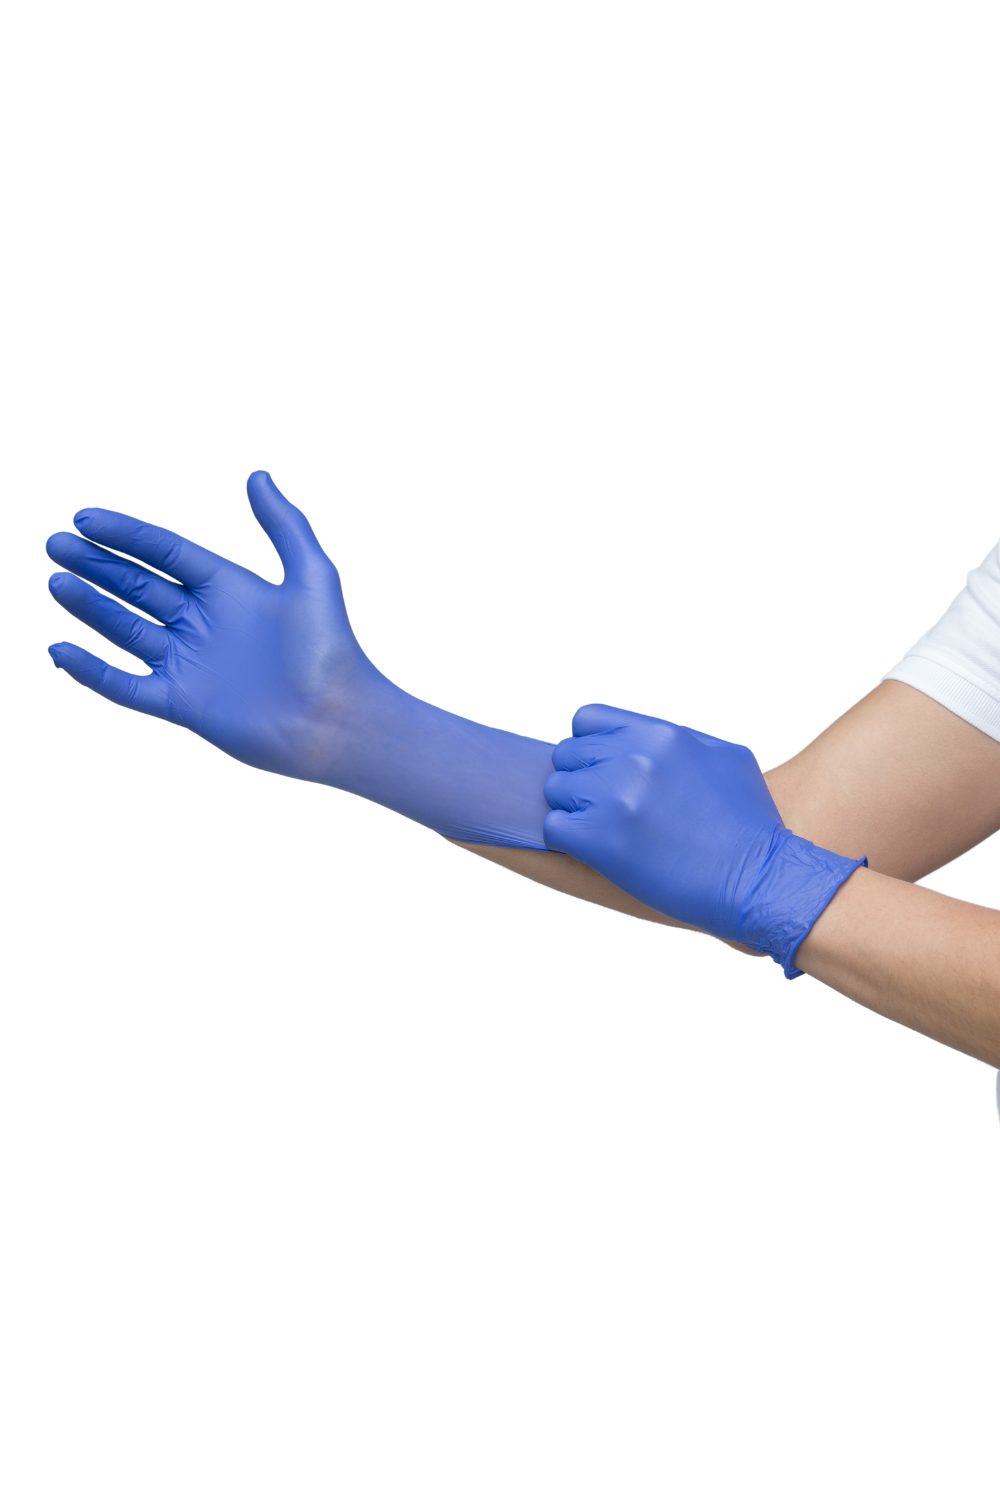 Nitrile Indigo Disposable Gloves PPE, XLarge, Powder Free (10 x 200) (13222-XL)